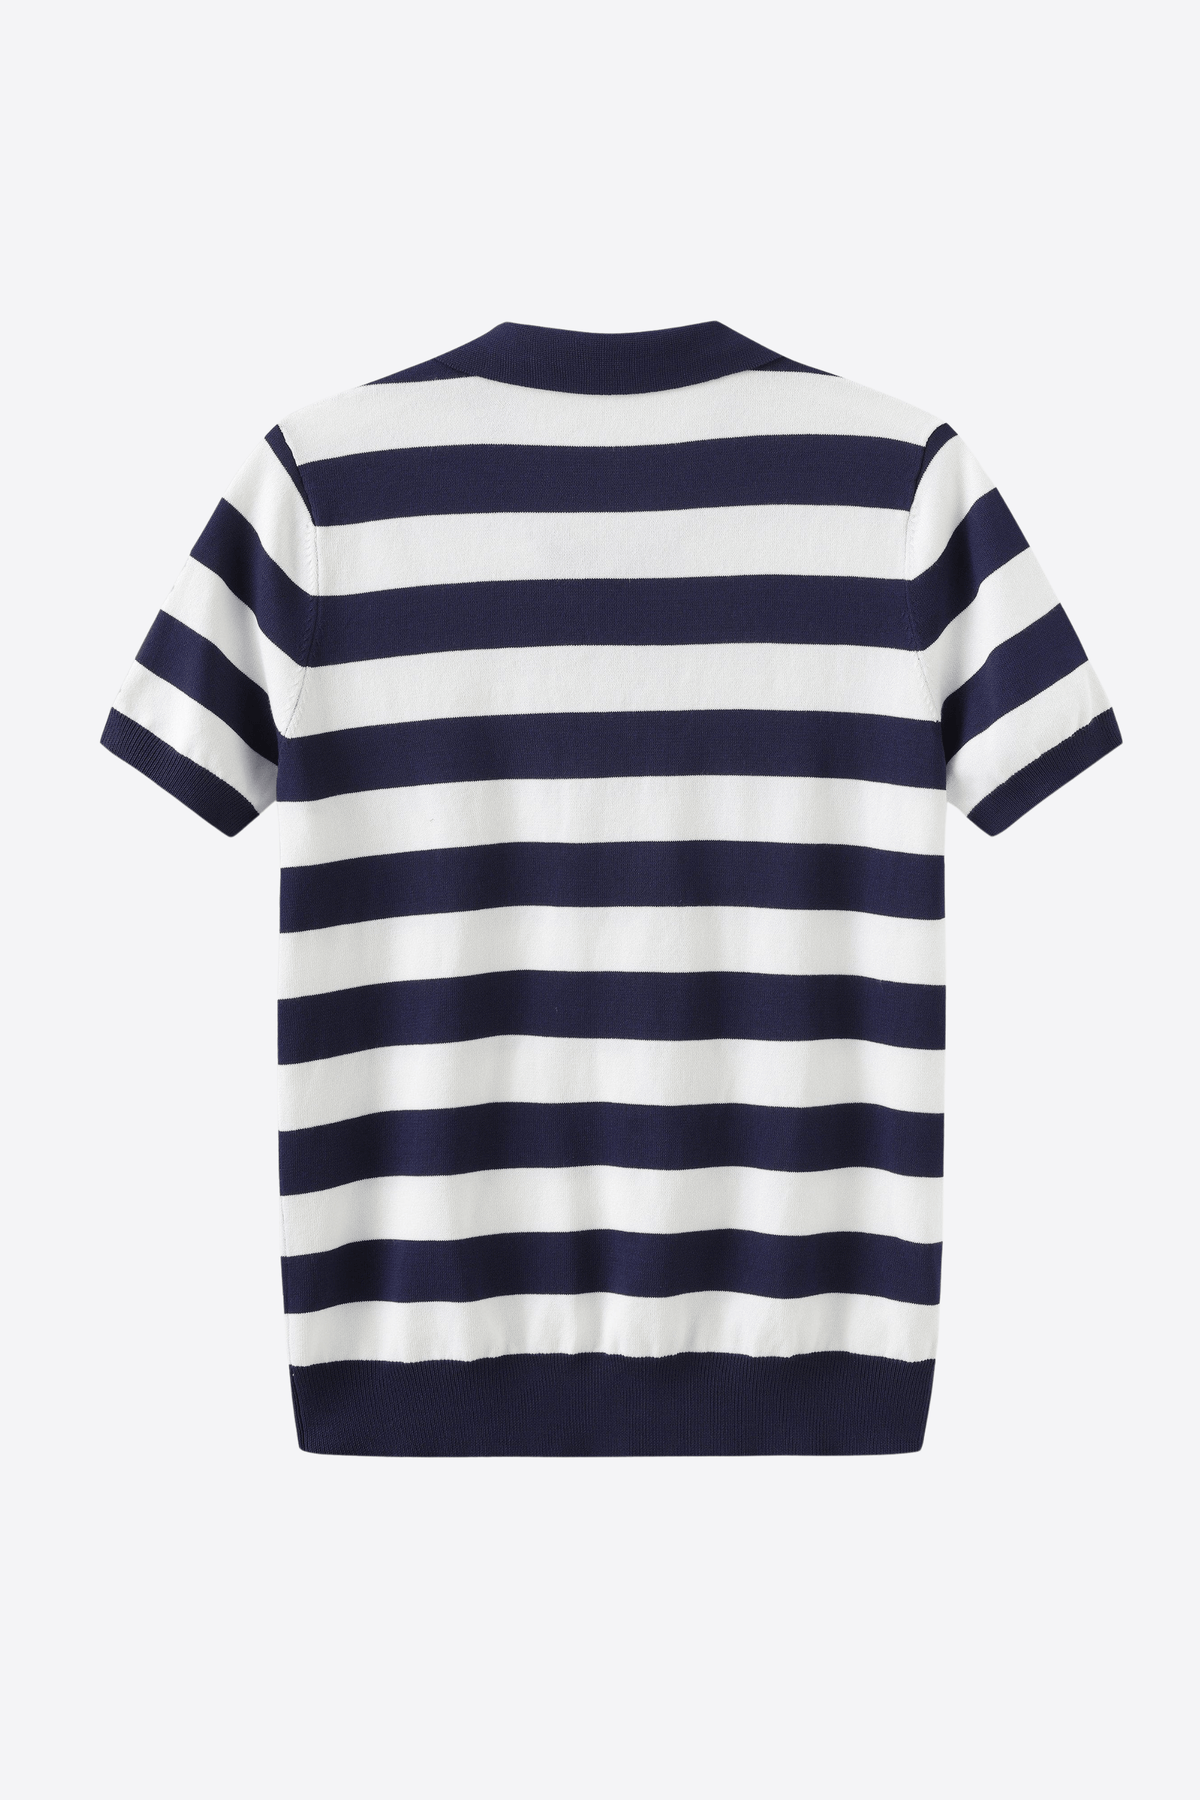 Alessandro Toscani™ ELIGIO™ | Striped Short Sleeve Polo Shirt